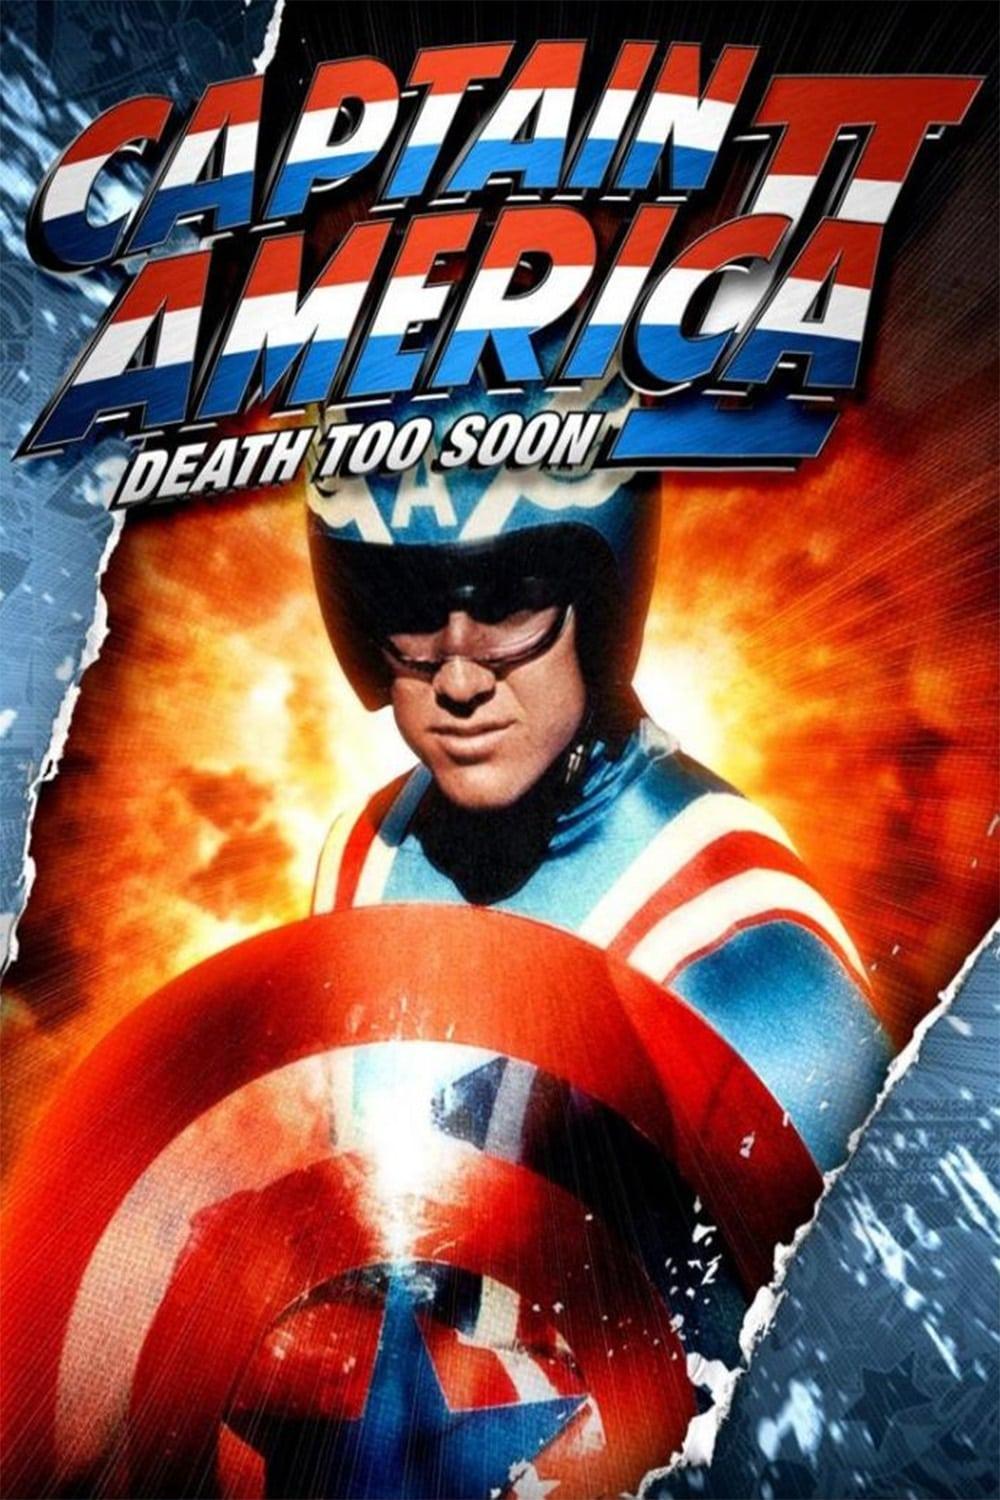 Captain America II: Death Too Soon poster